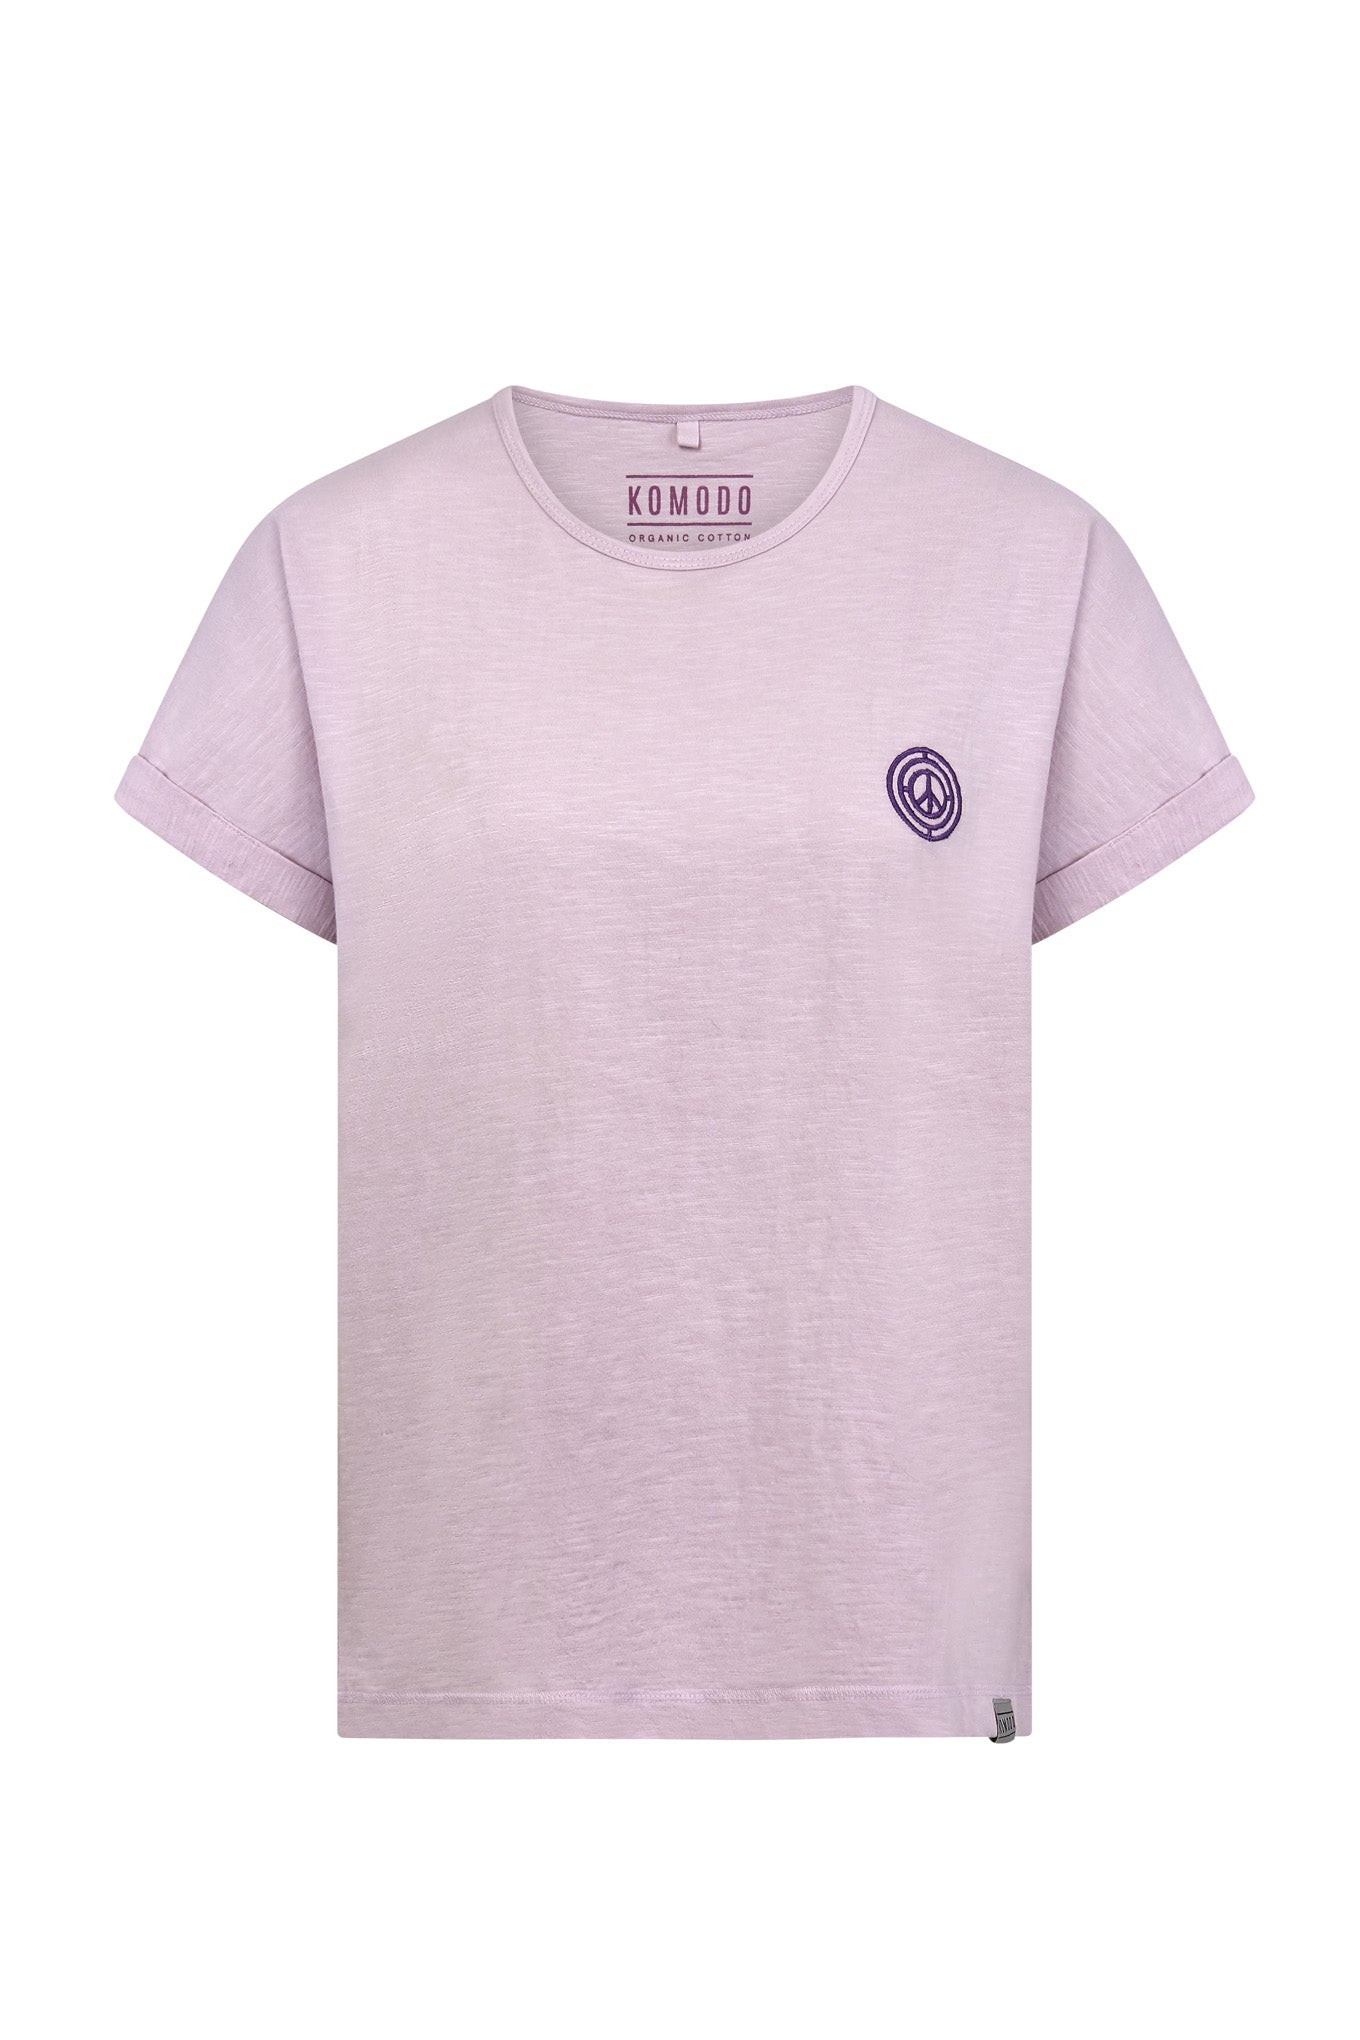 Purple T-shirt SUNRISE made of organic cotton from Komodo